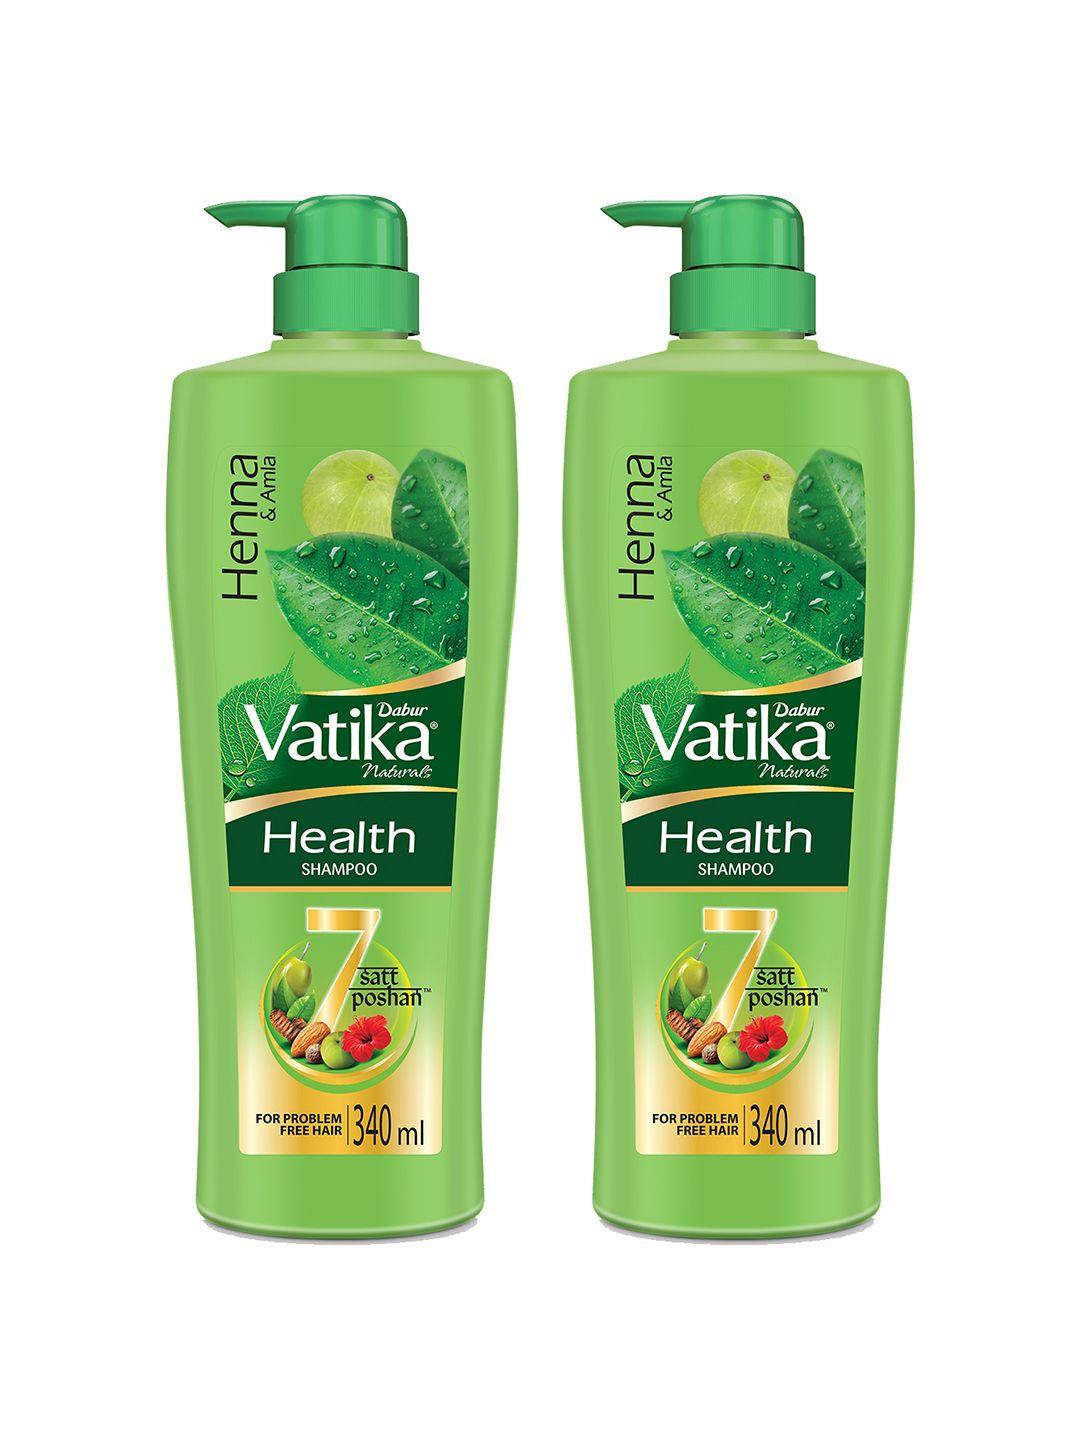 dabur set of 2 vatika health shampoo with 7 natural ingredients - 340ml each